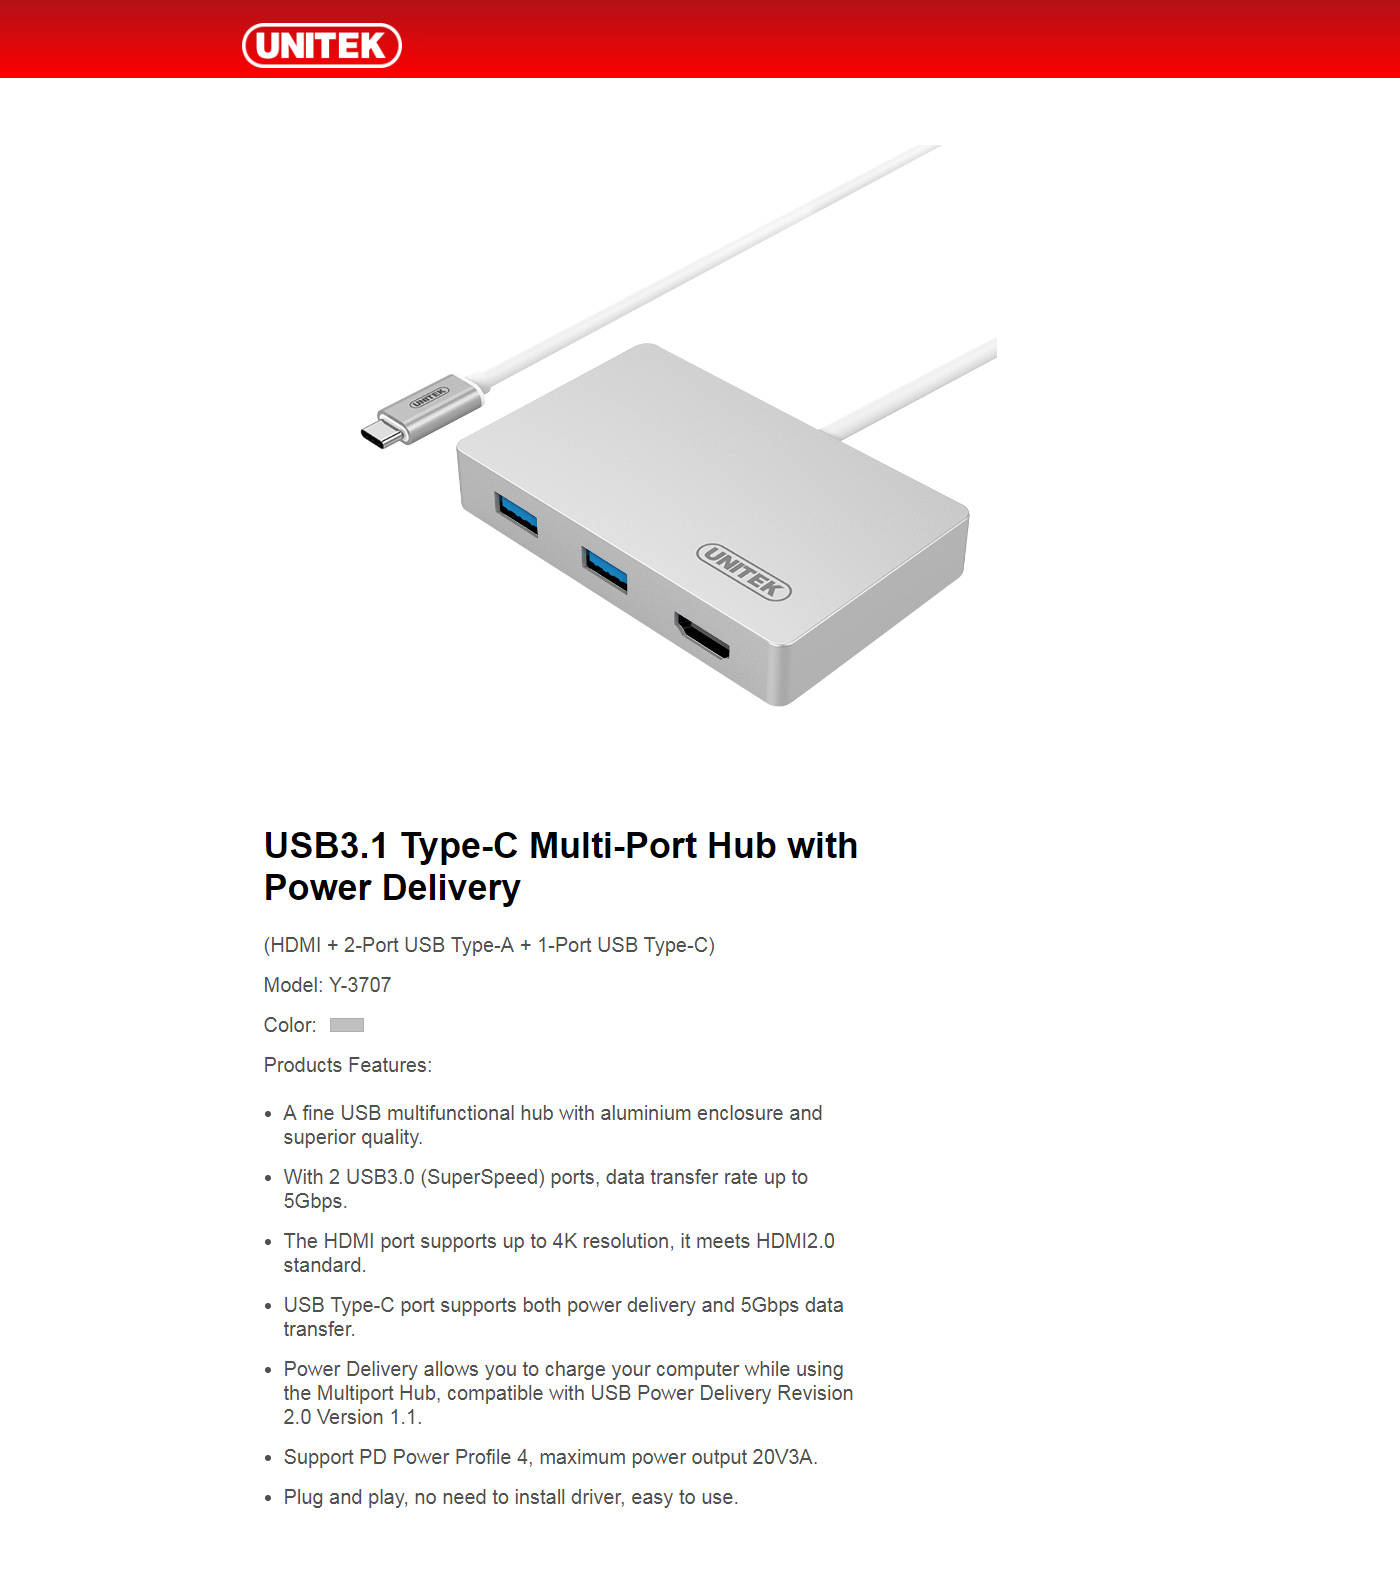  Buy Online Unitek USB3.1 Type-C Multi-Port Hub with Power Delivery Y-3707 (UT-142)